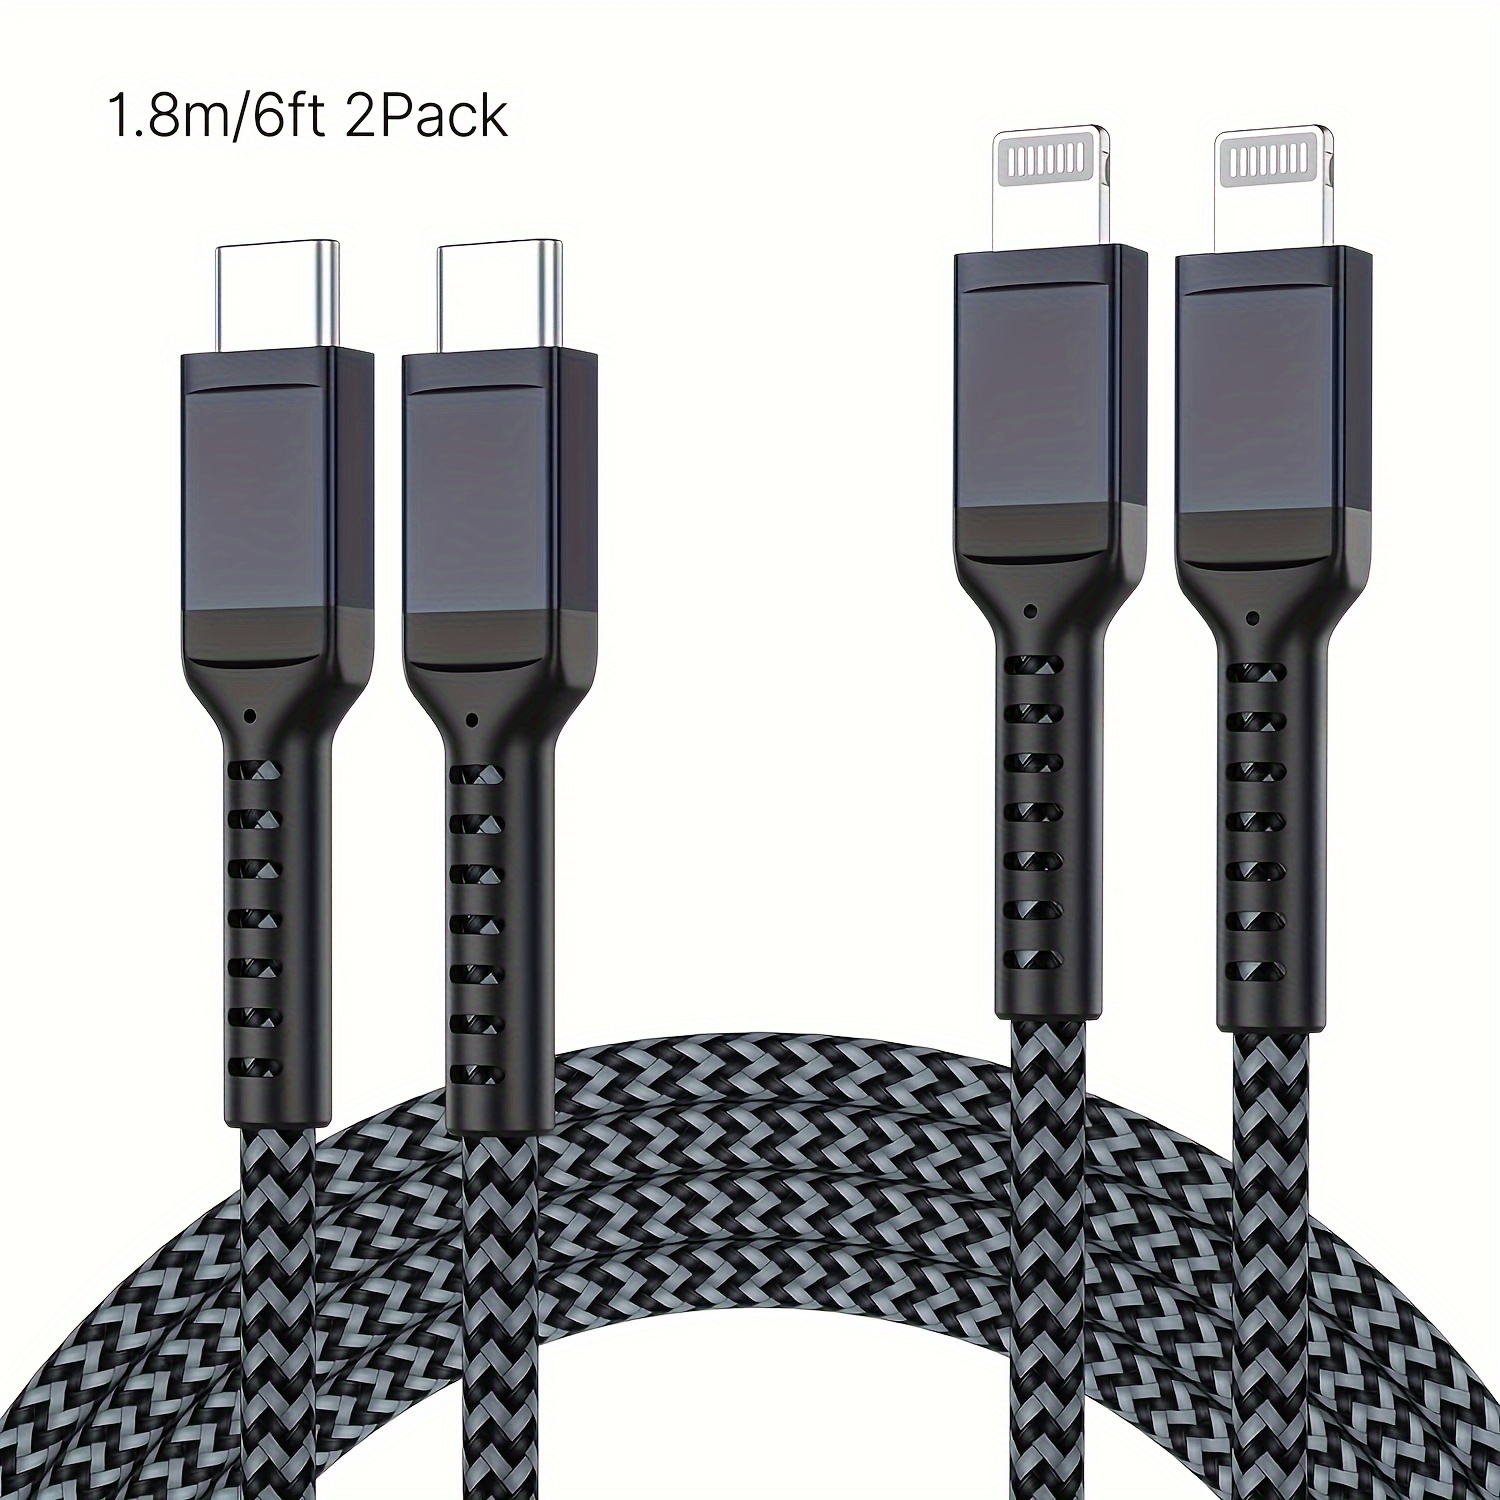 Câble charge rapide PD 20W USB Type C vers iPhone Nylon Tressé